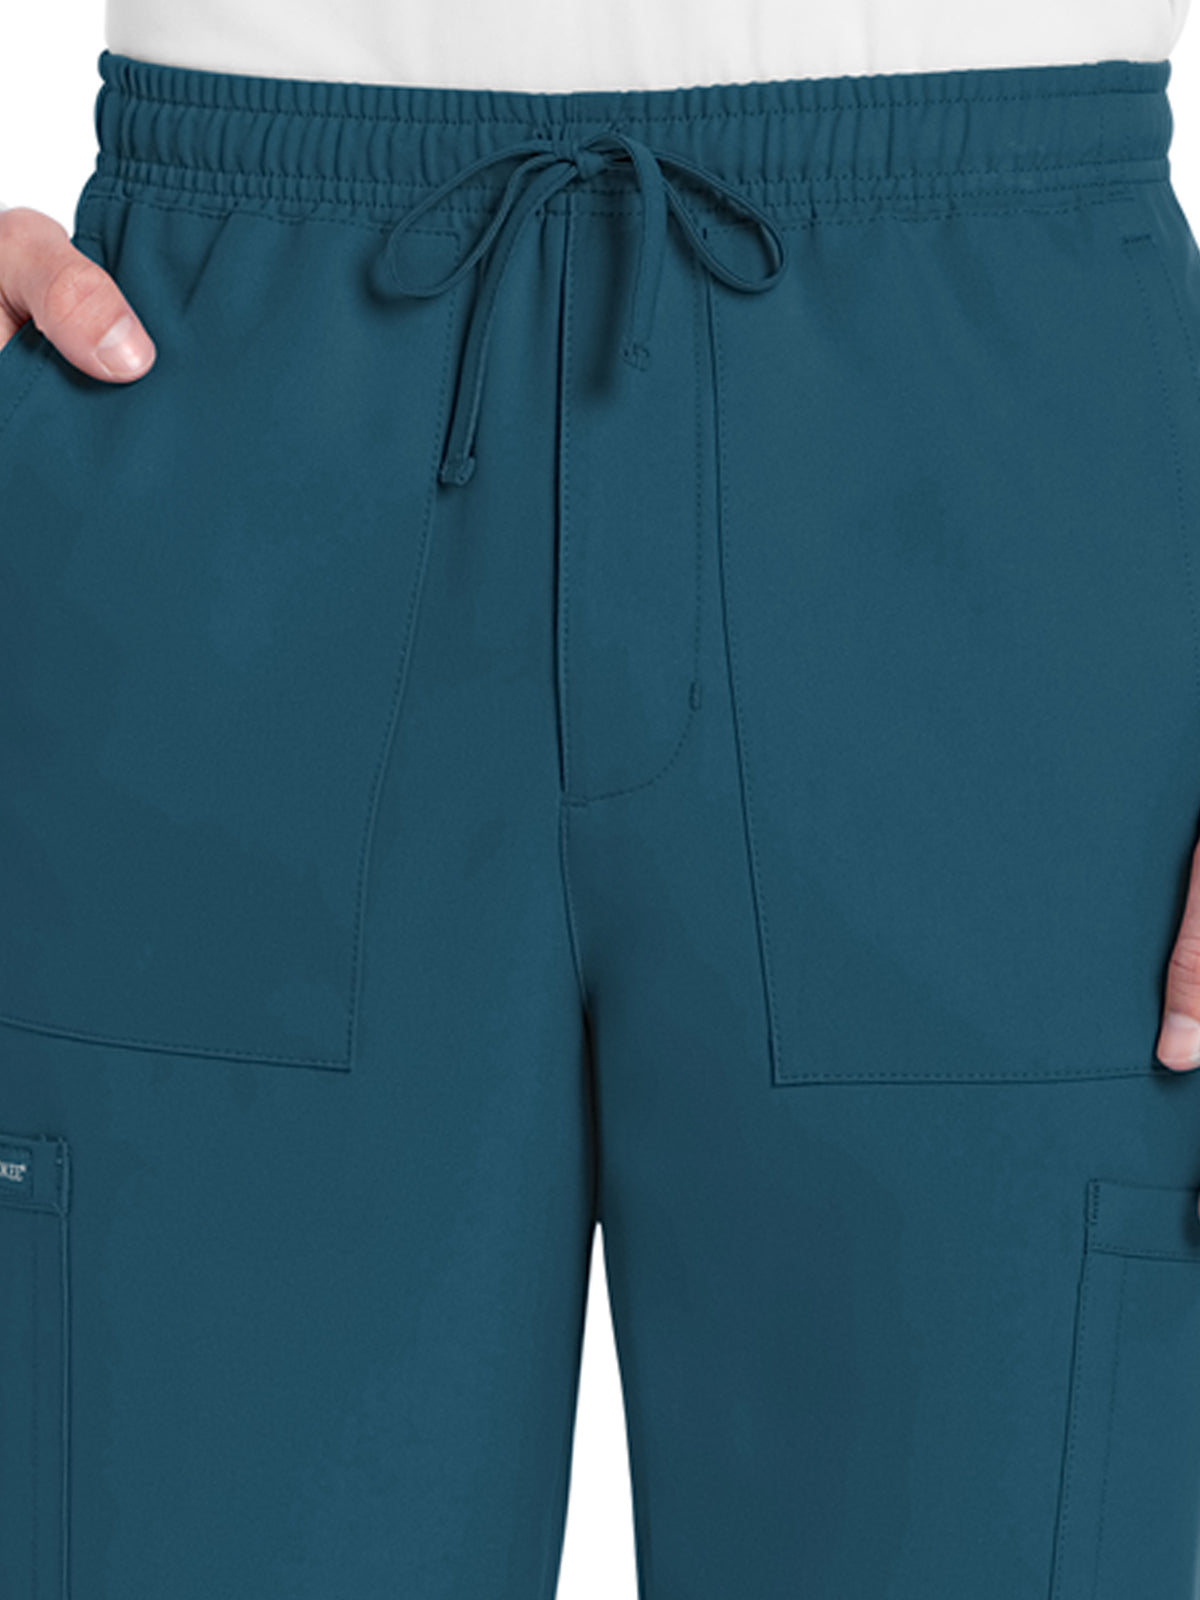 Men's 6-Pocket Straight Leg Pant - CK279A - Caribbean Blue